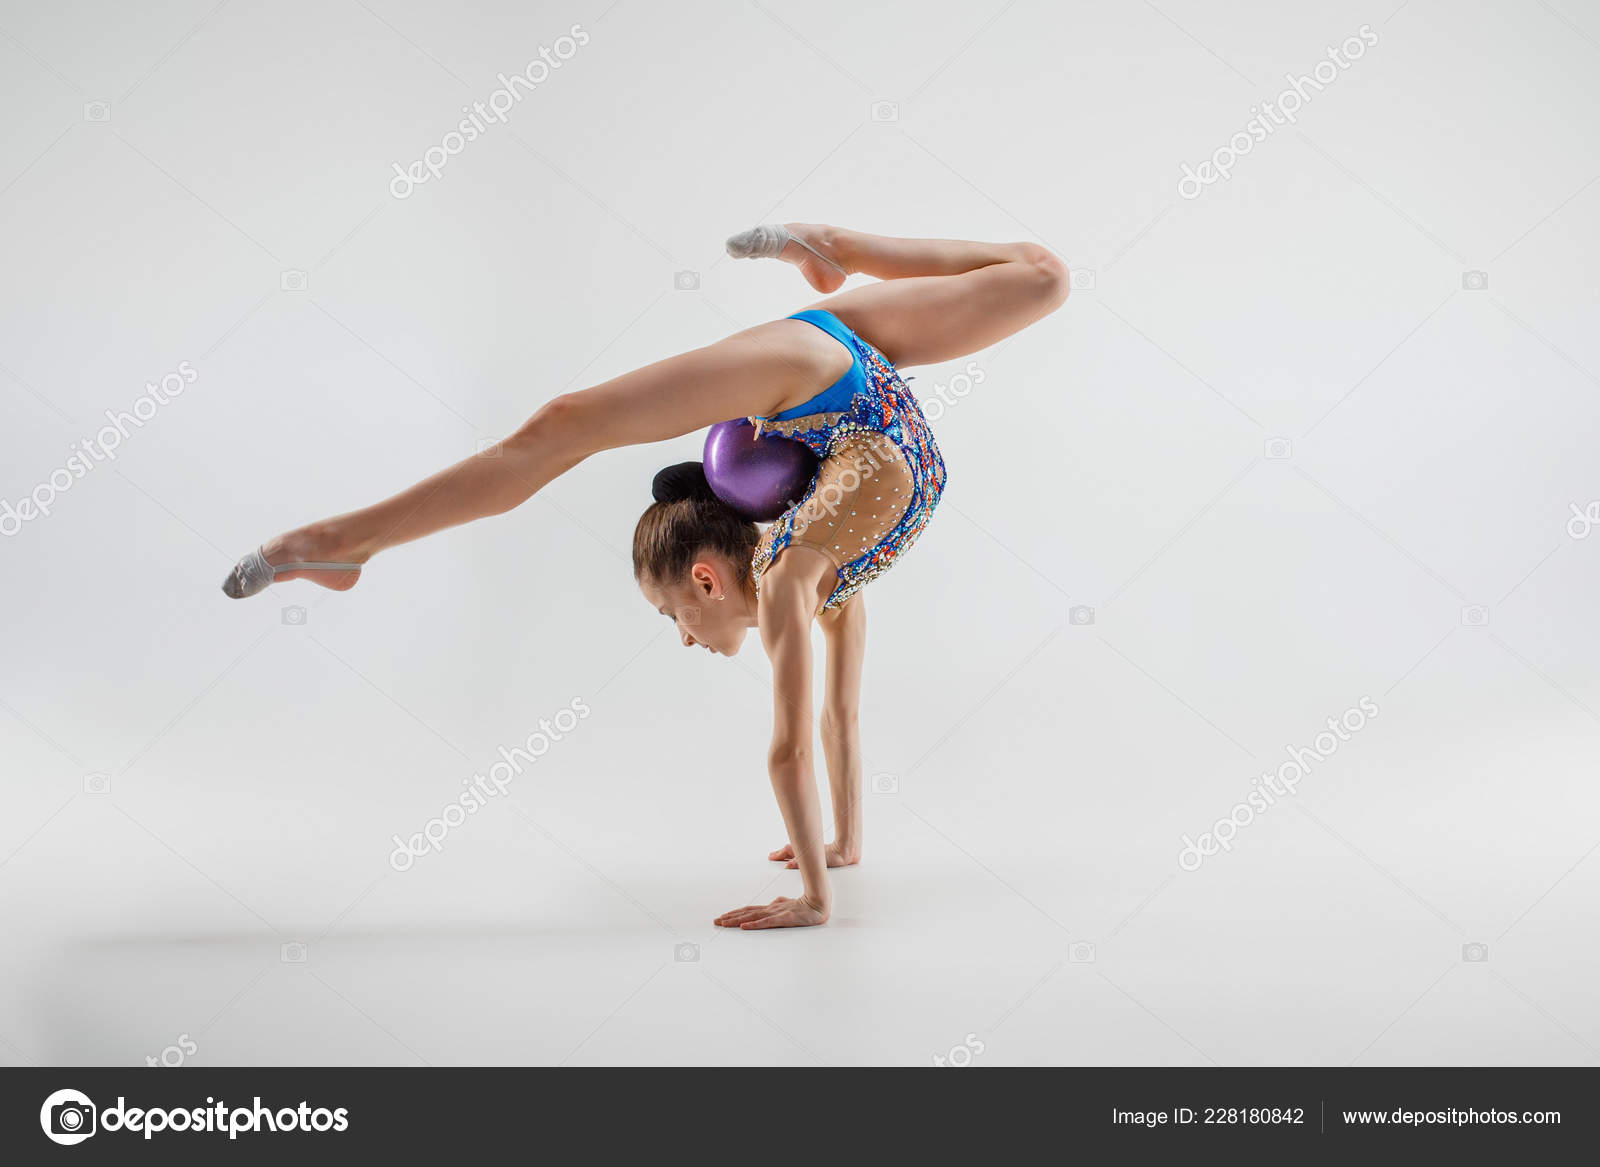 Intimate life of a gymnastic girl